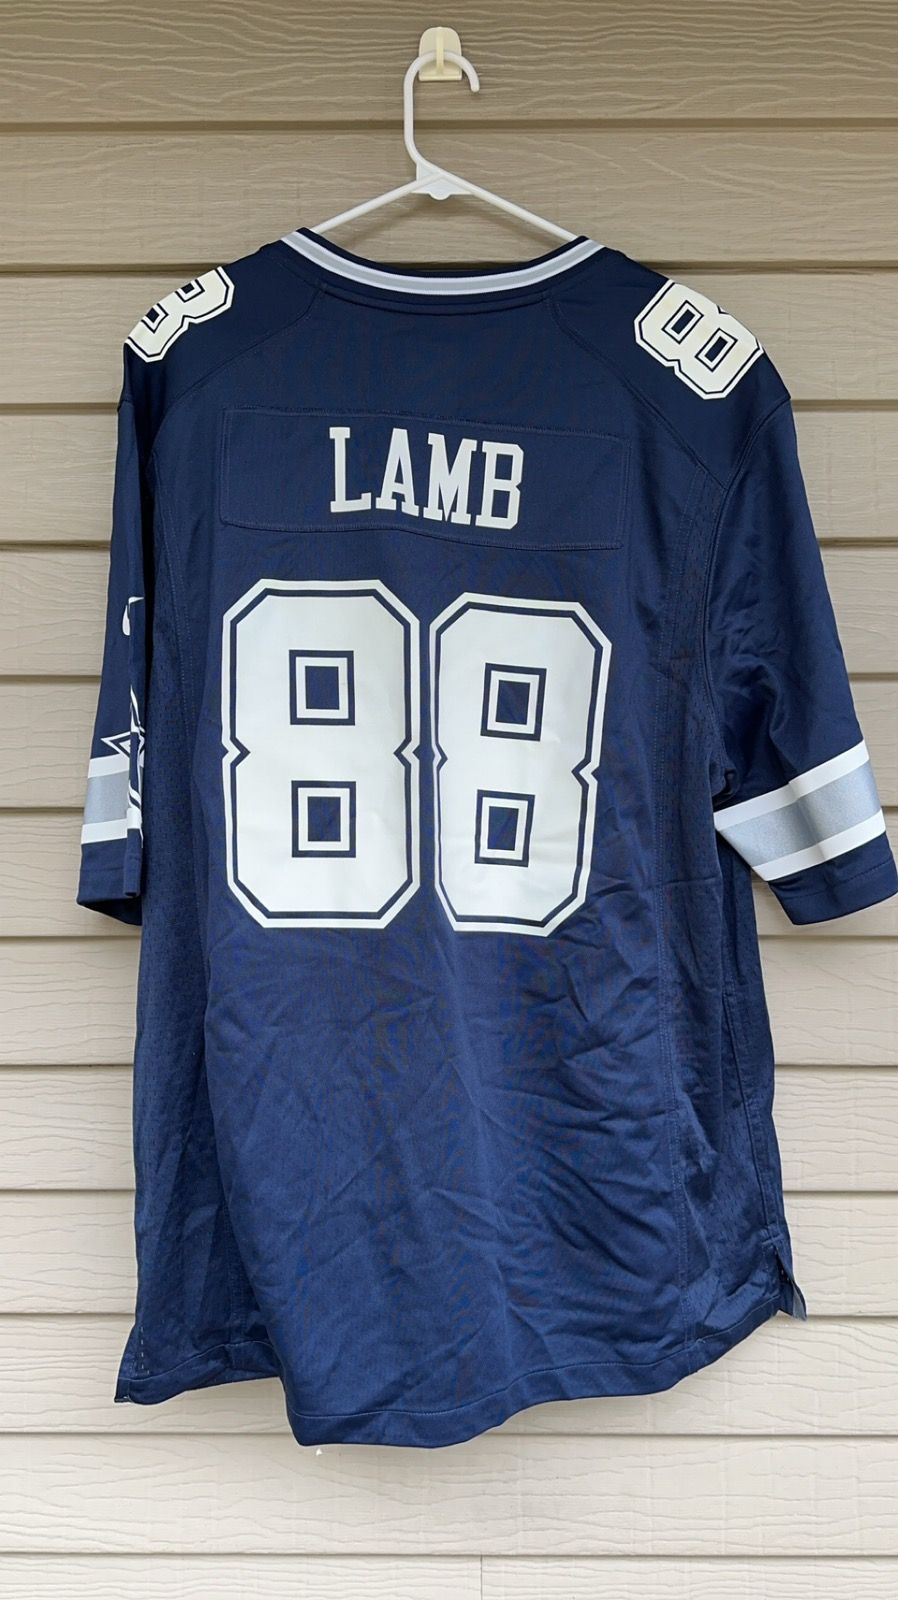 Nike Nike CeeDee Lamb Dallas Cowboys NFL Jersey Men’s XL Blue Size US XL / EU 56 / 4 - 1 Preview